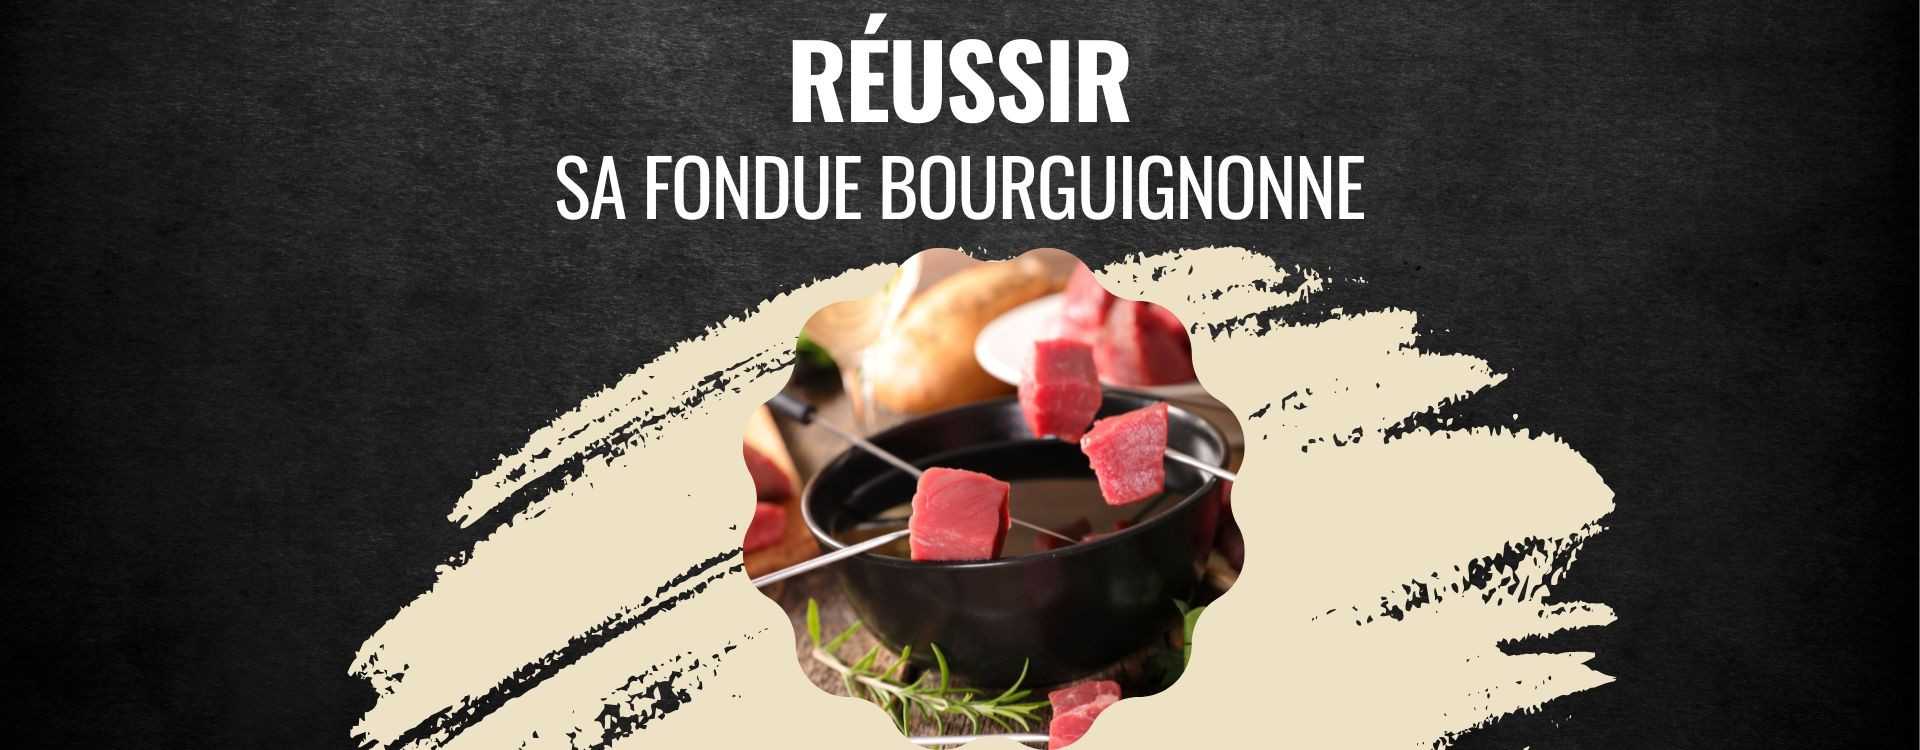 Réussir sa fondue bourguignonne